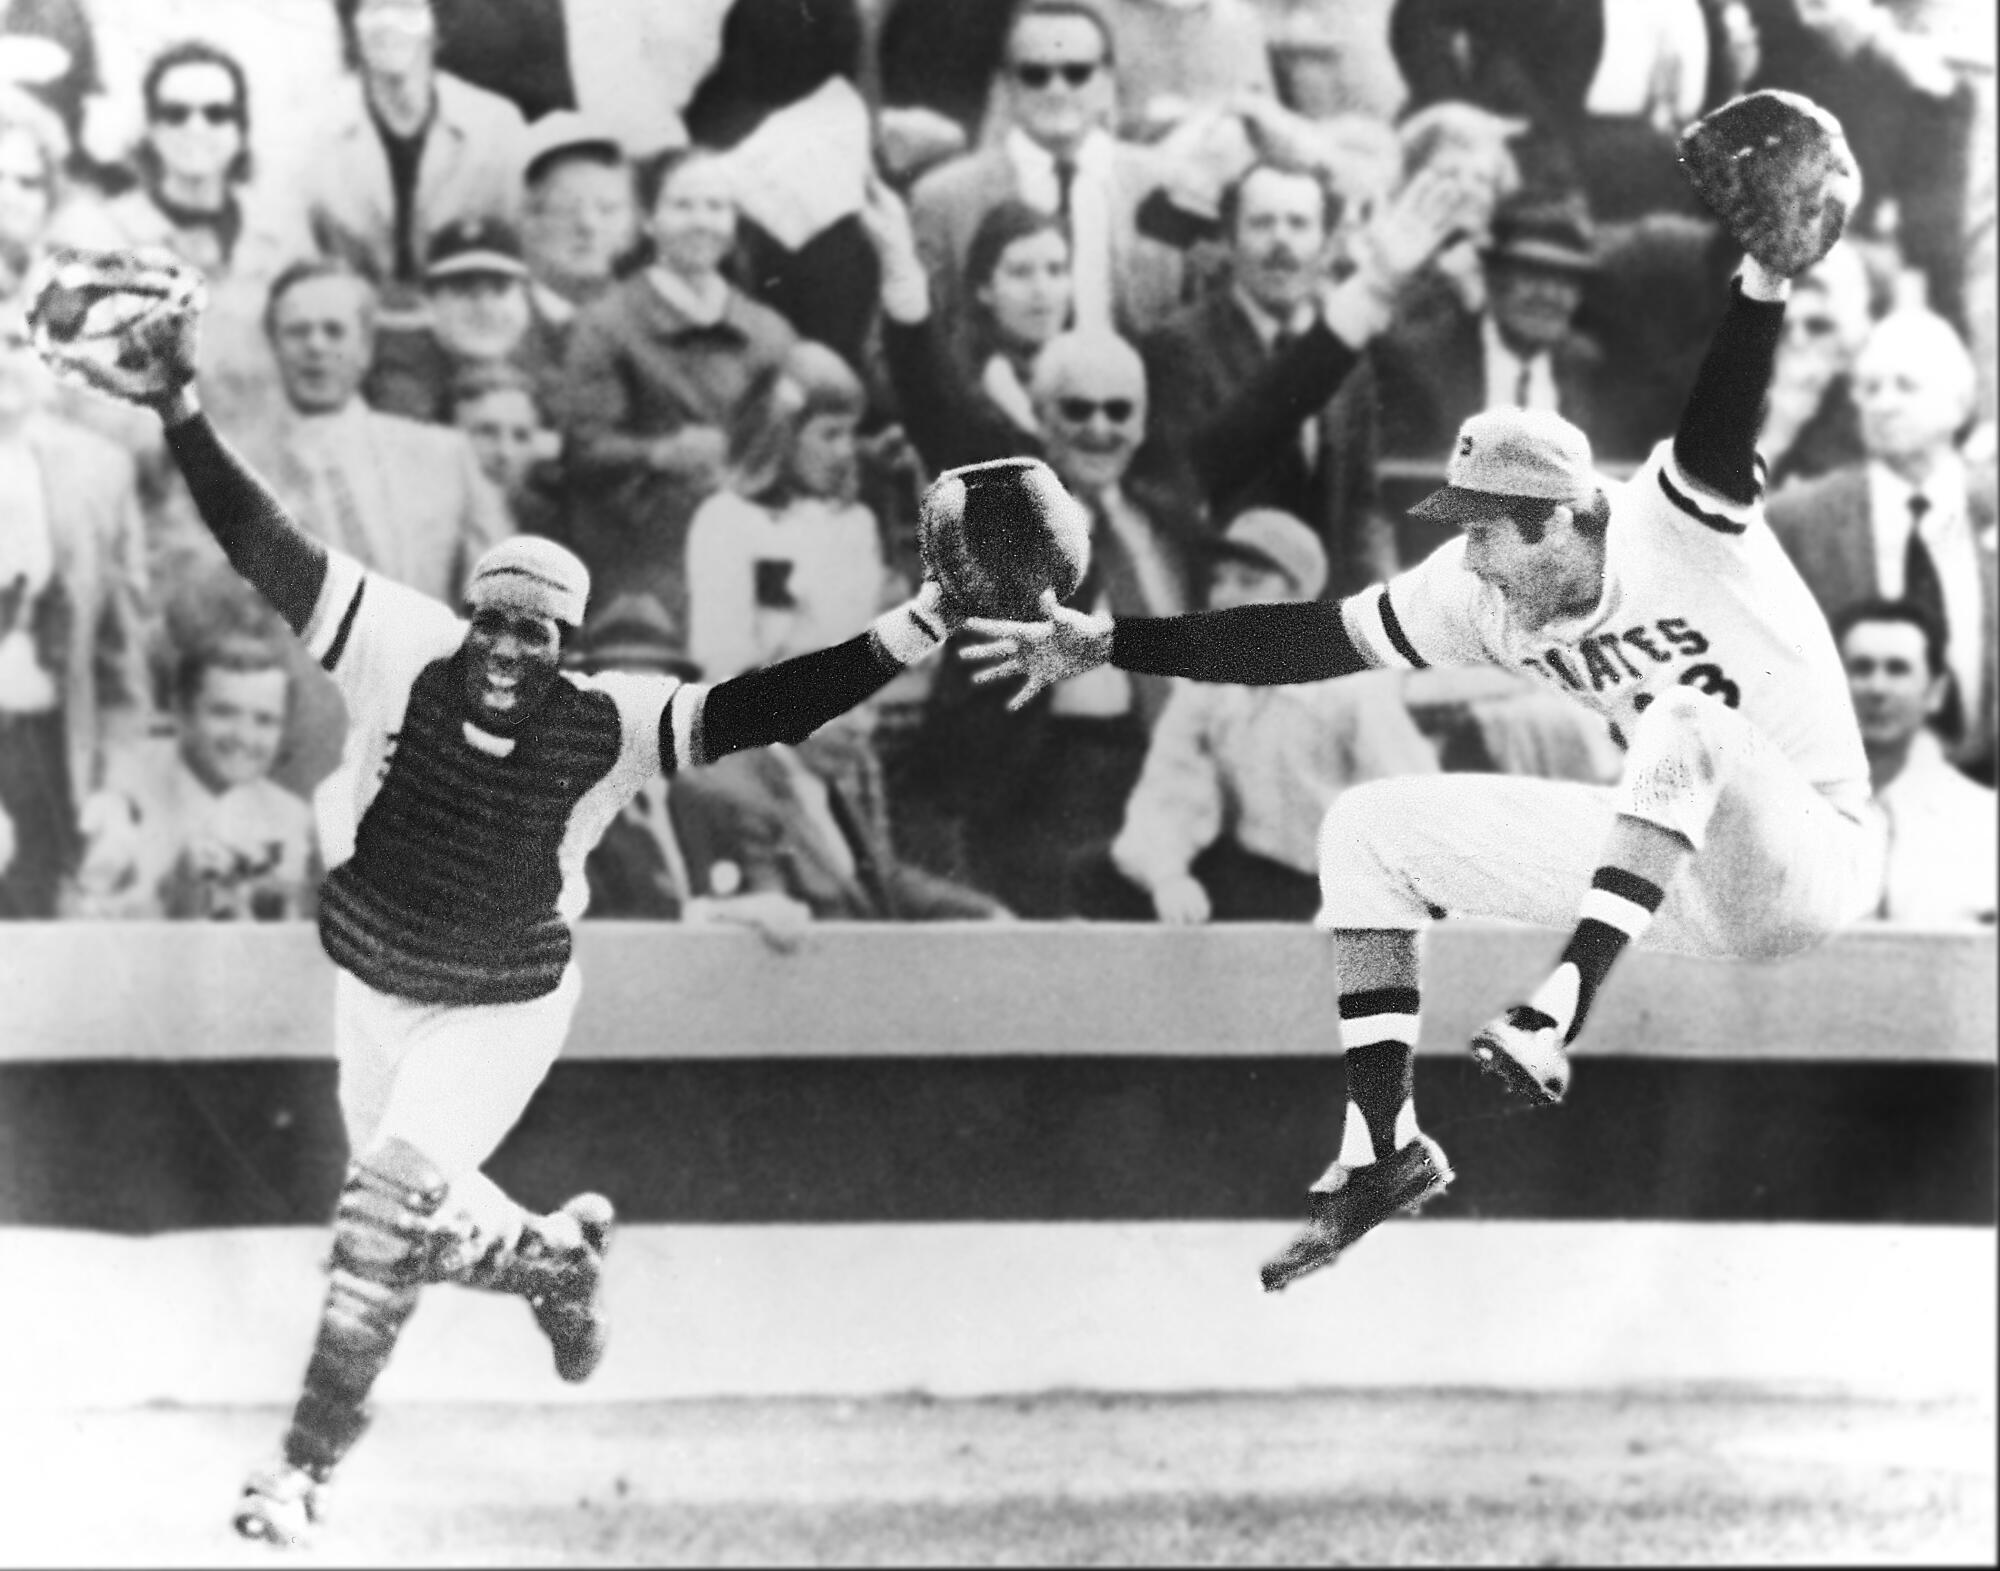 Pirates pitcher Steve Blass and catcher Manny Sanguillen celebrate after winning the 1971 World Series.